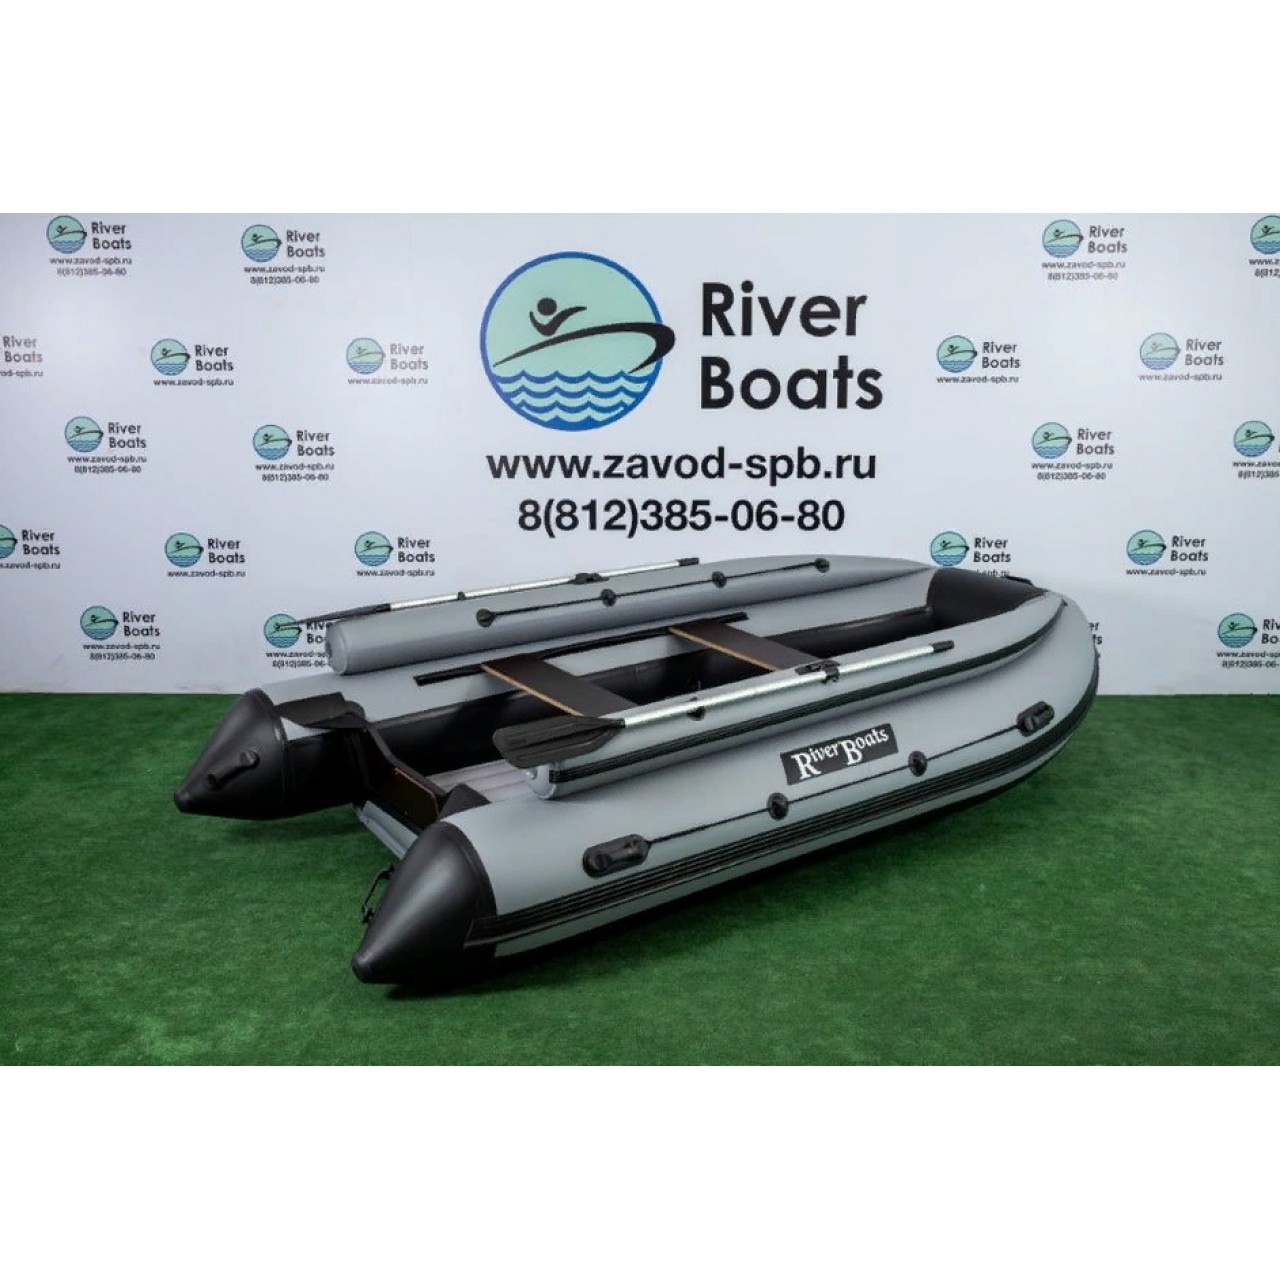 River Boats RB 410 (НДНД) + Фальшборт